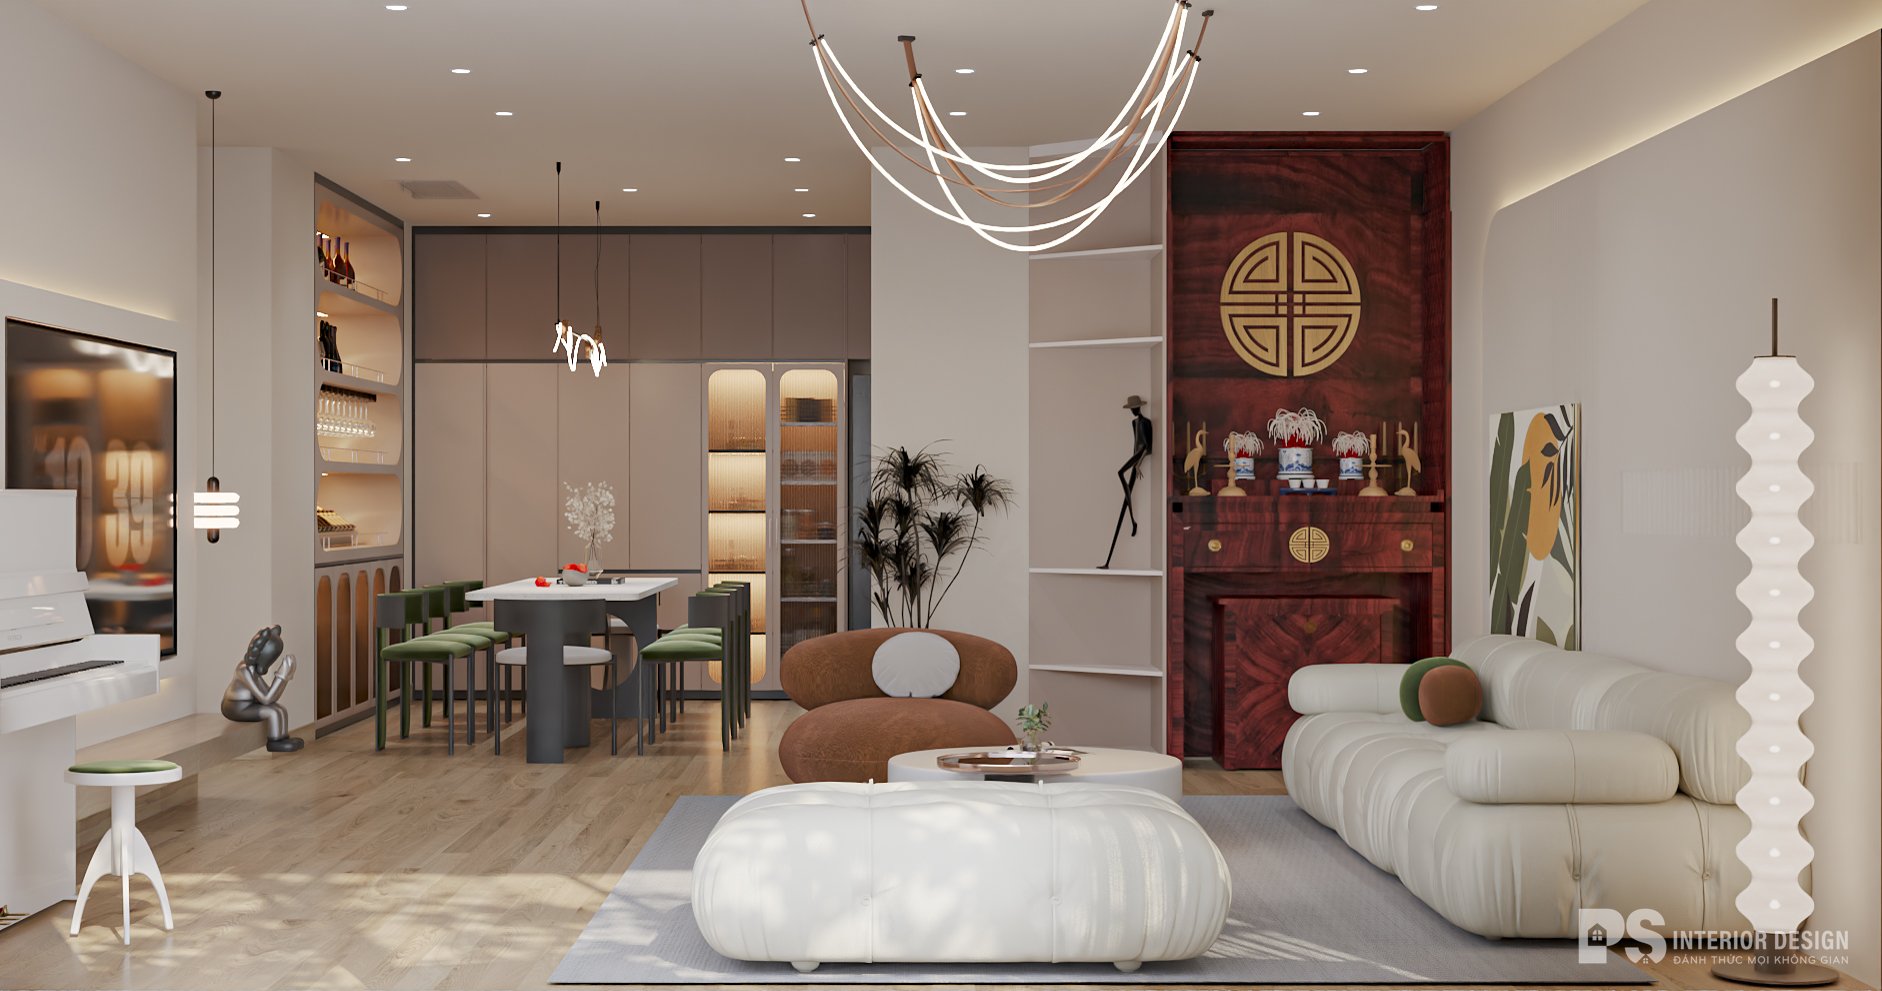 Thiết kế căn hộ Wabi Sabi - PS Interior Design